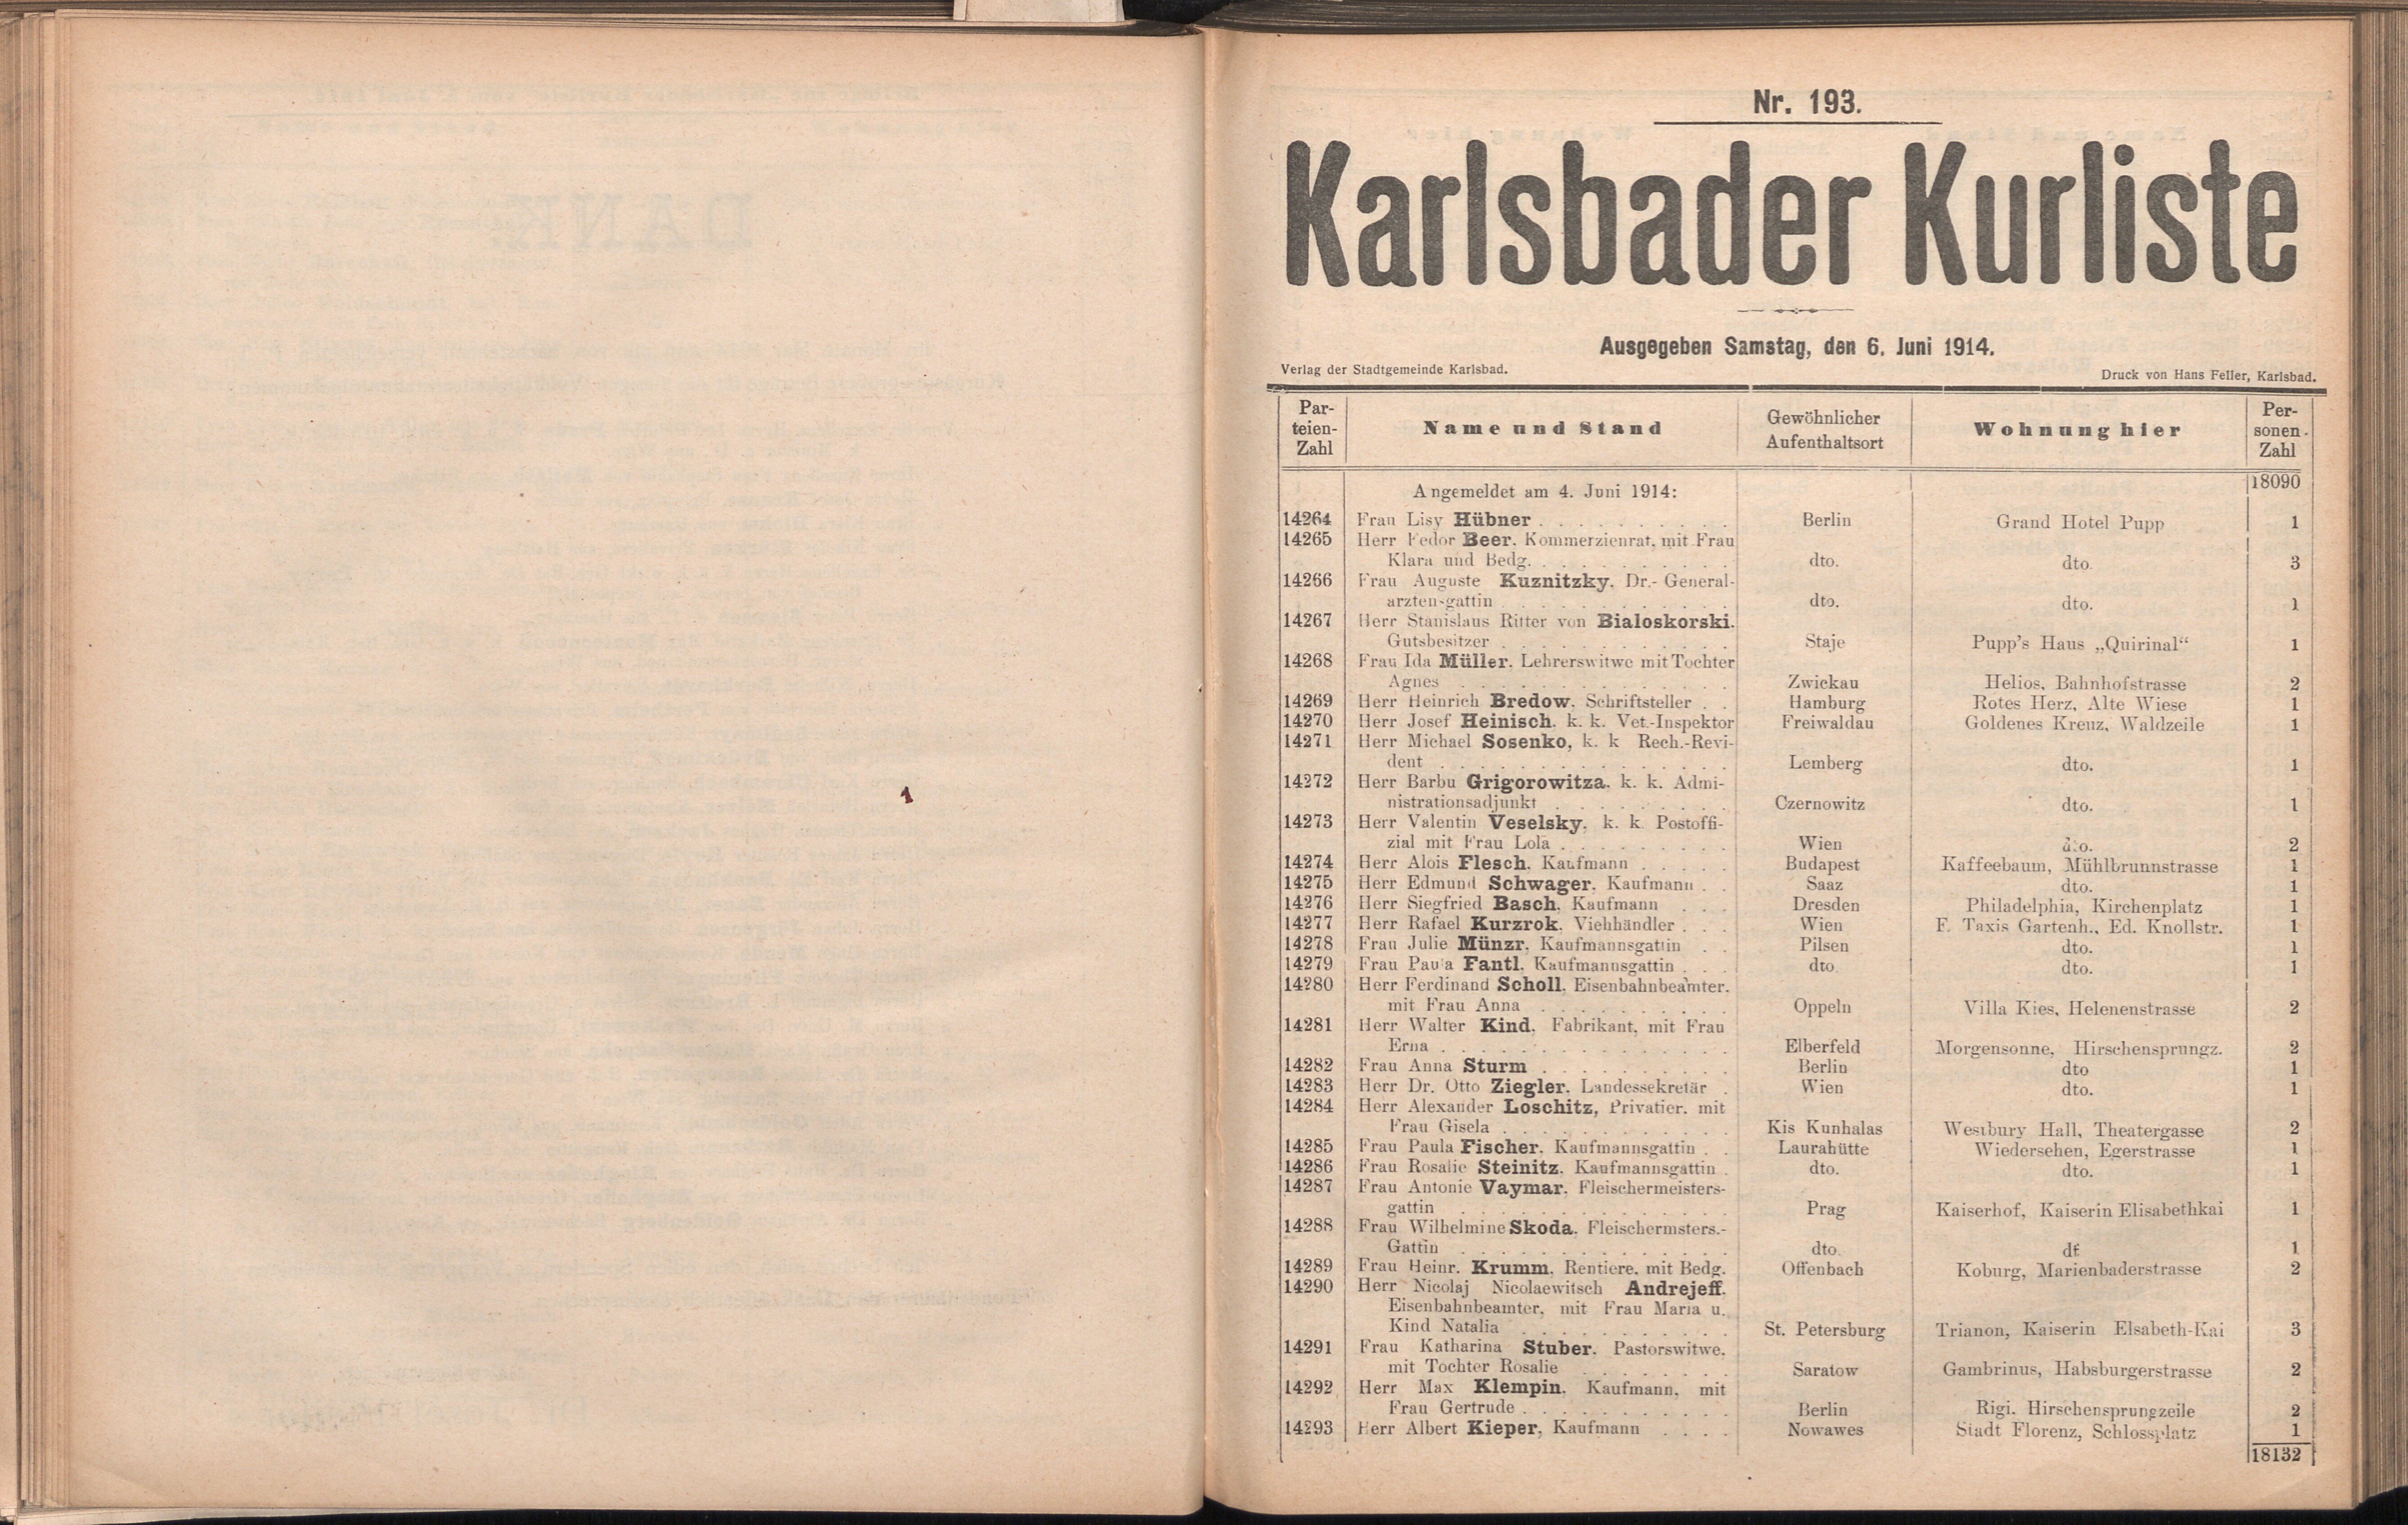 278. soap-kv_knihovna_karlsbader-kurliste-1914_2780